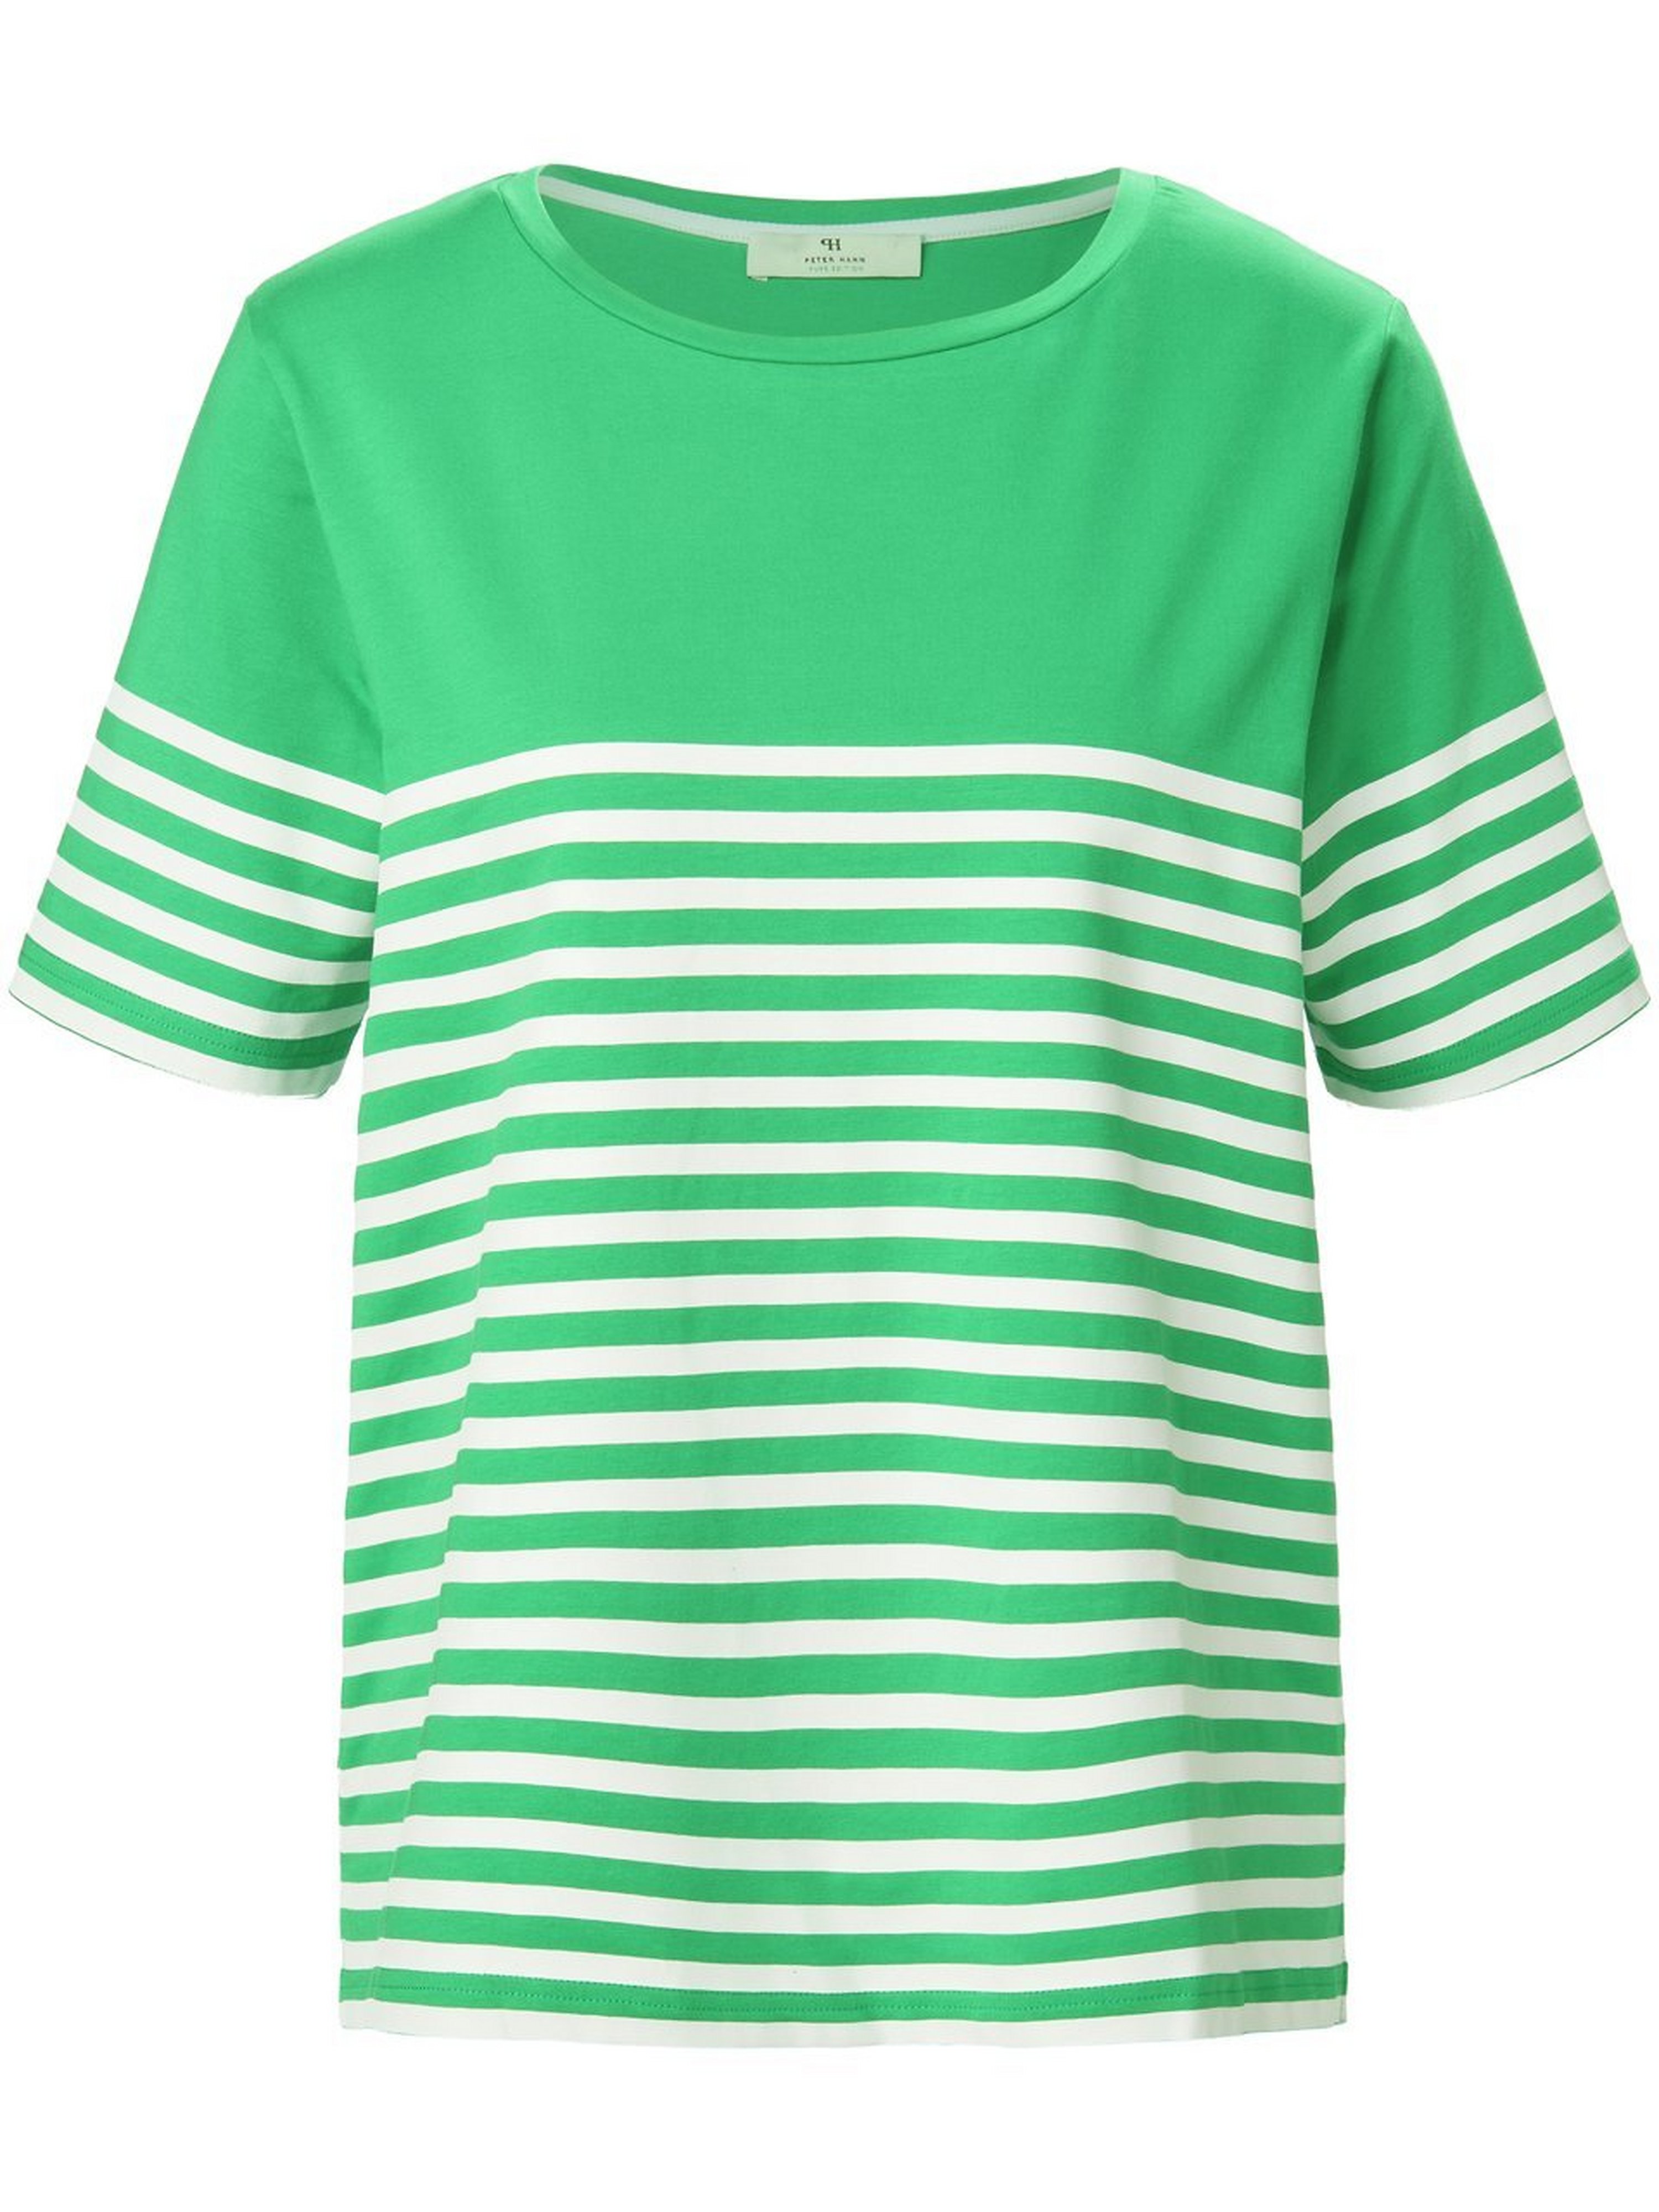 Le T-shirt manches courtes  PETER HAHN PURE EDITION vert